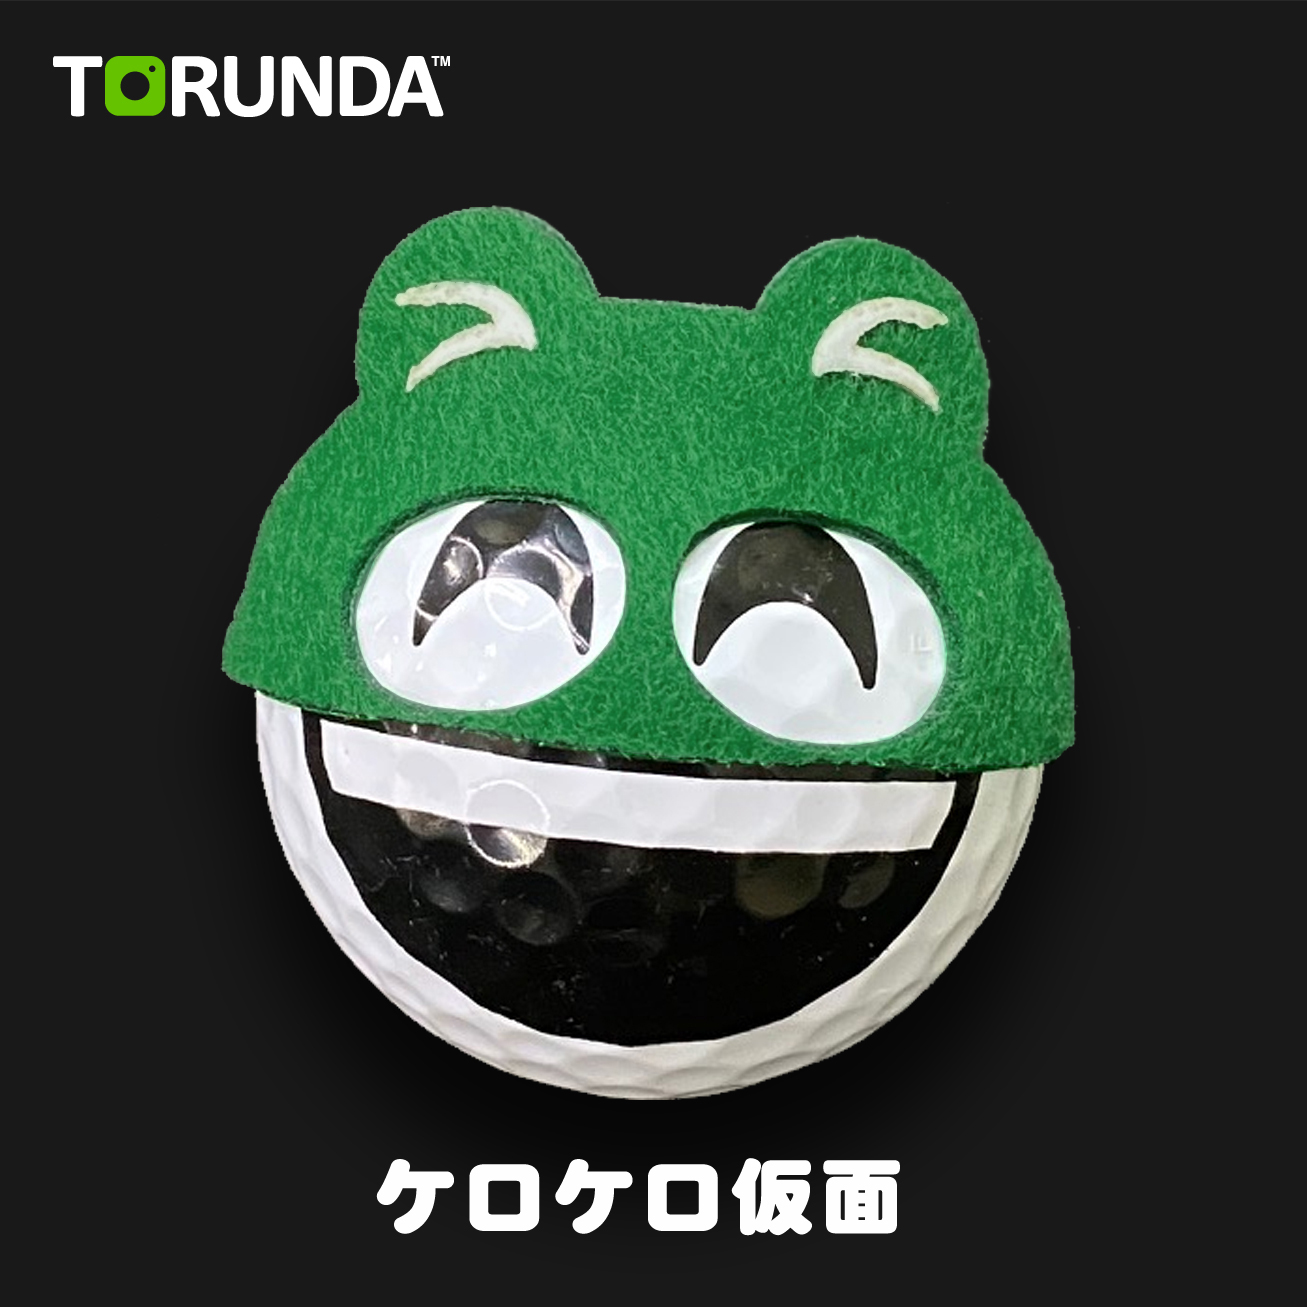 TORUNDA 撮るんだ かわいい 可愛い ゴルフボール用 ケロケロ仮面